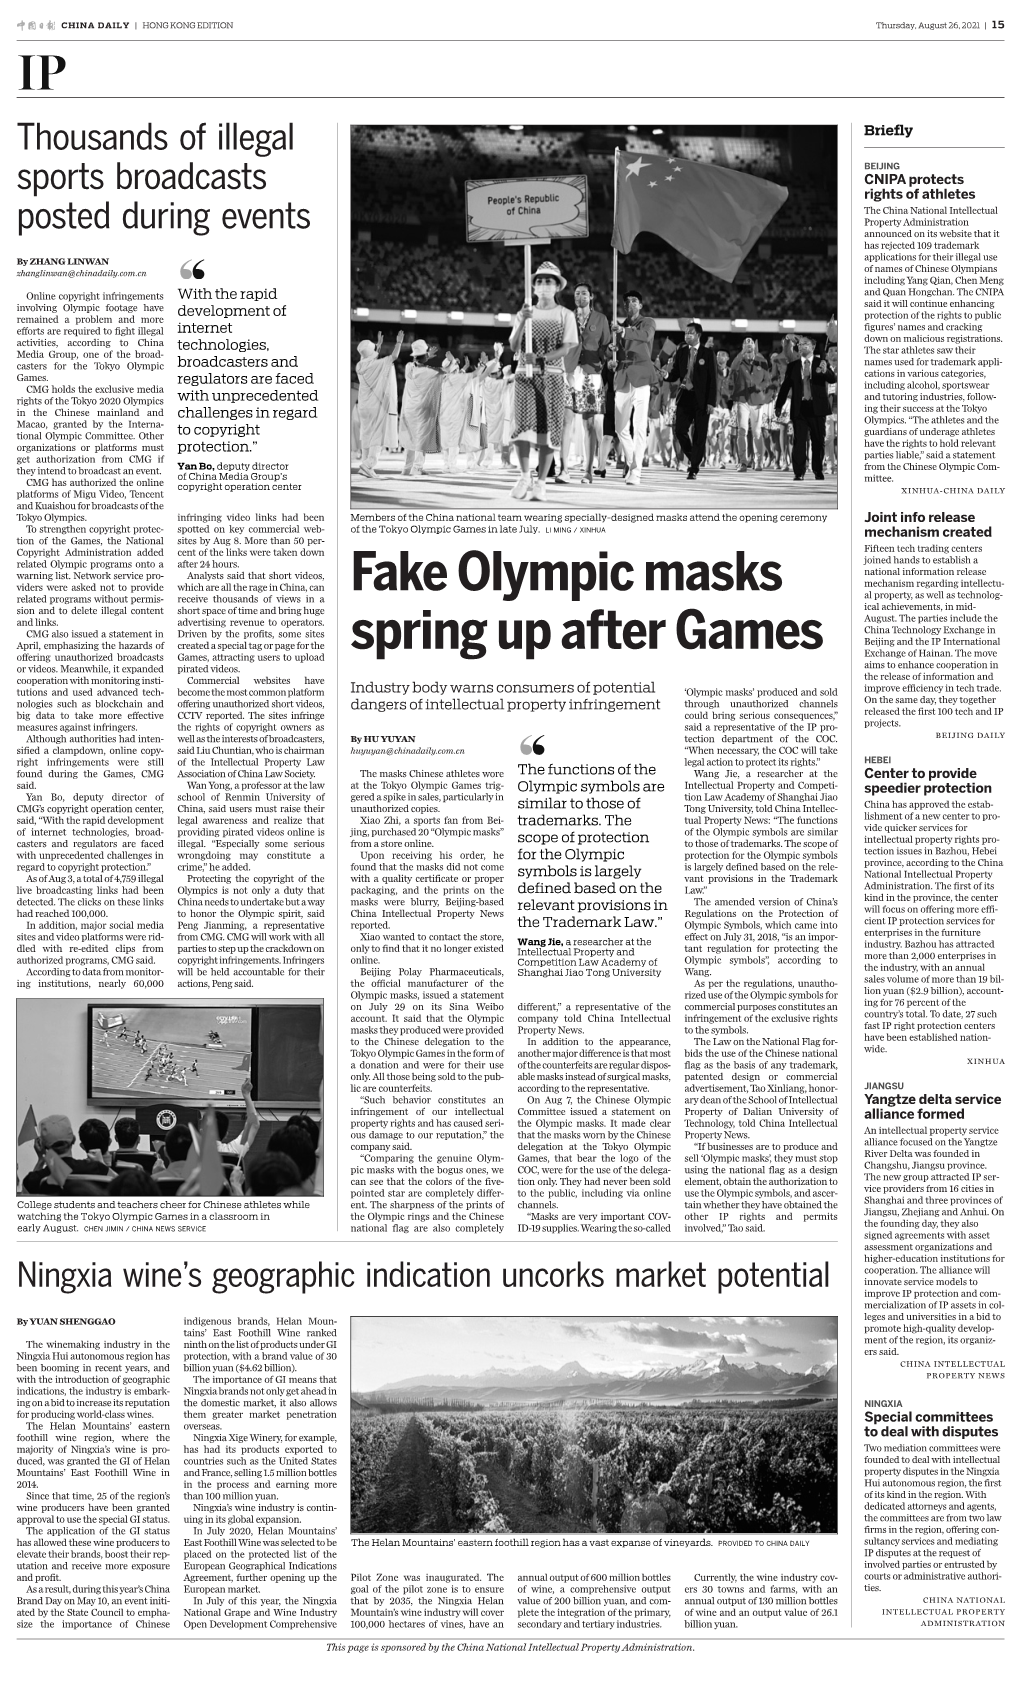 Fake Olympic Masks Spring up After Games